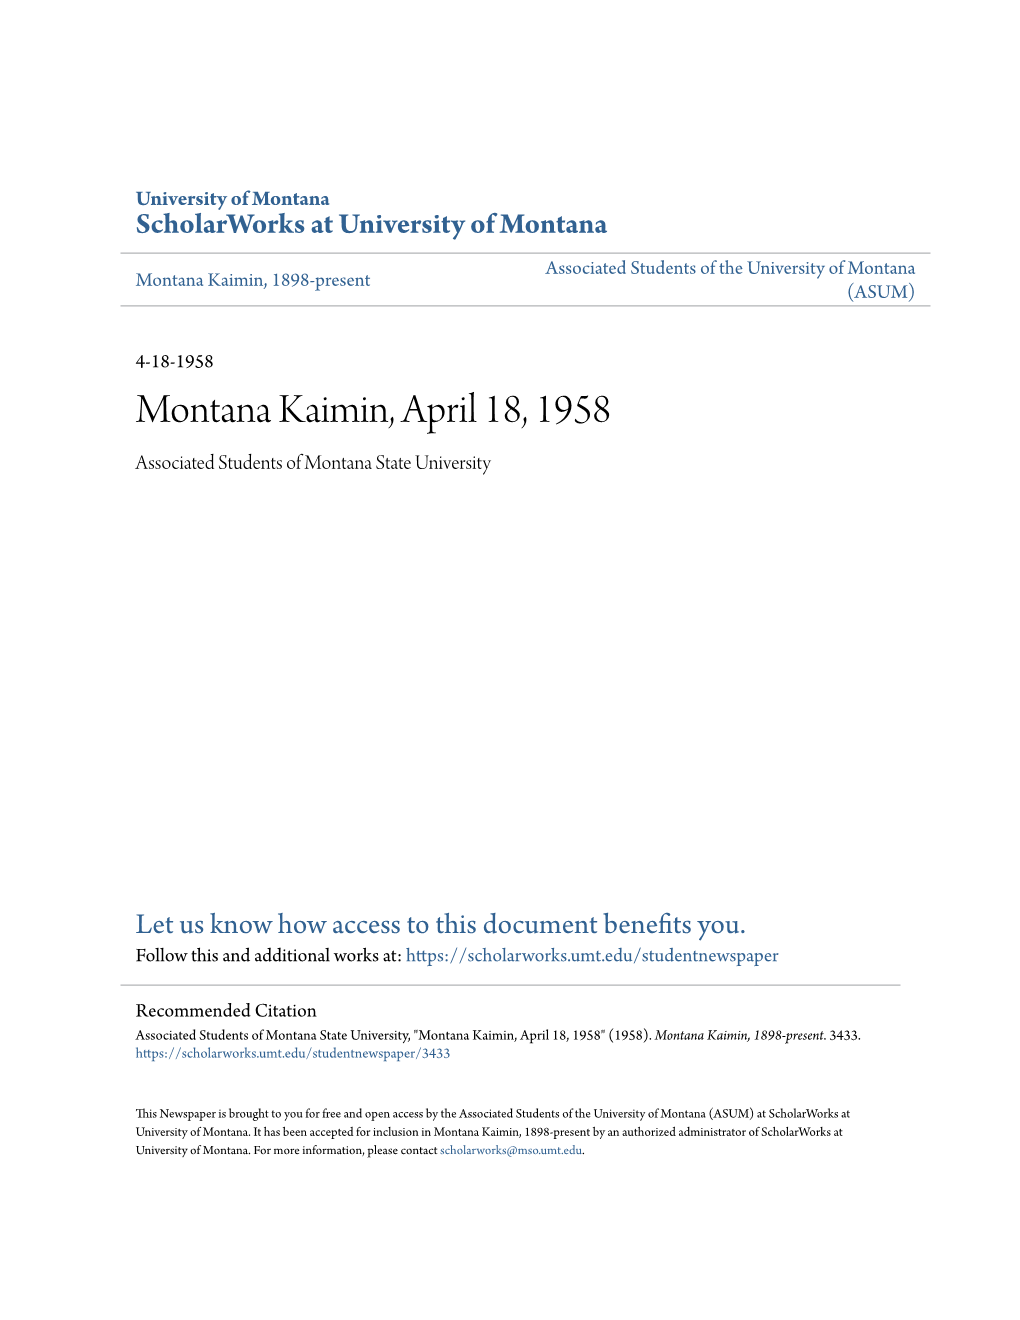 Montana Kaimin, April 18, 1958 Associated Students of Montana State University